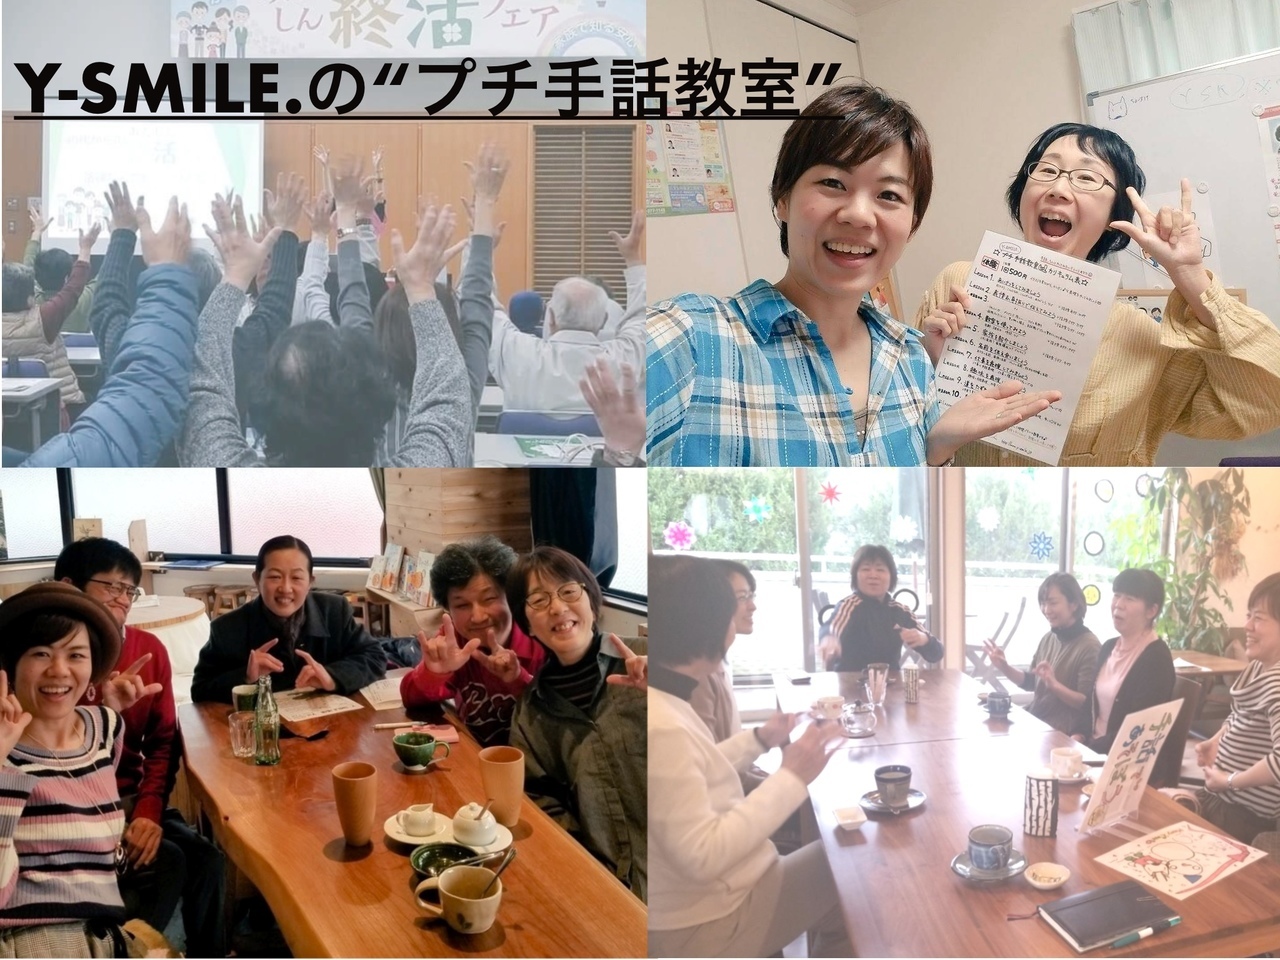 Y-SMILE.の”プチ手話教室”